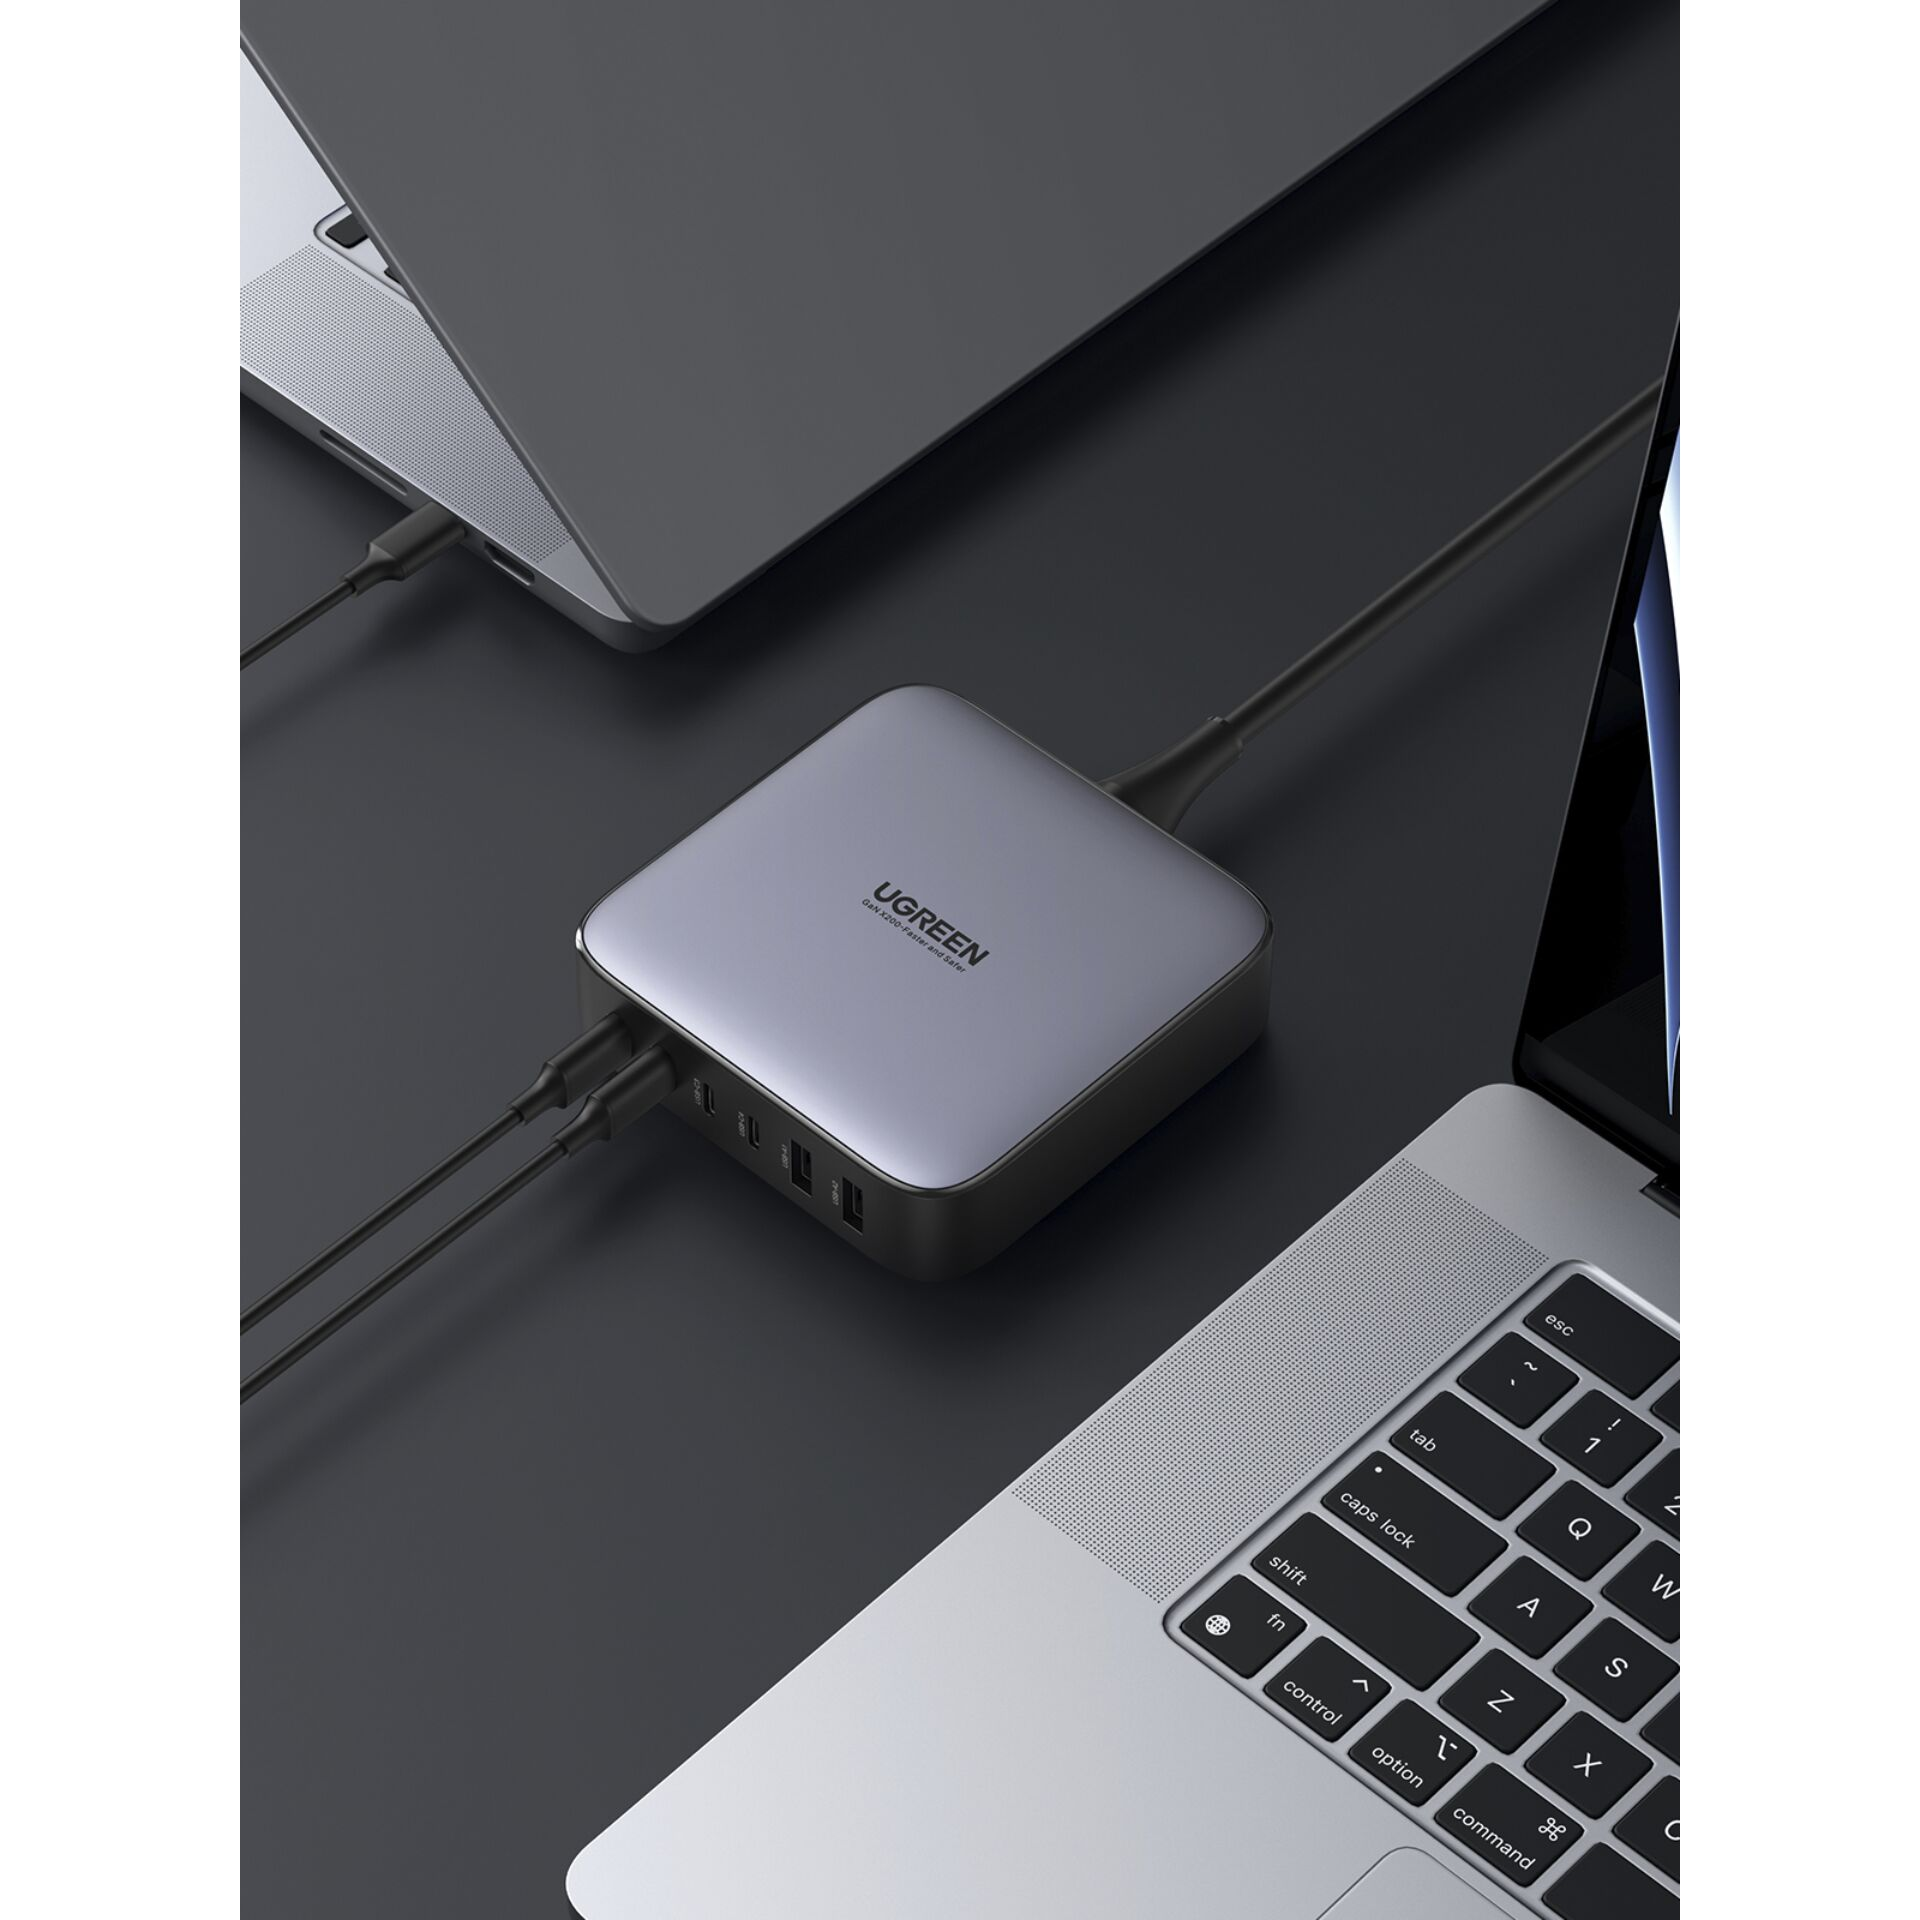 UGREEN 2USB-A+4USB-C 200W Desktop USB-Ladegerät silber Charger Fast Universal